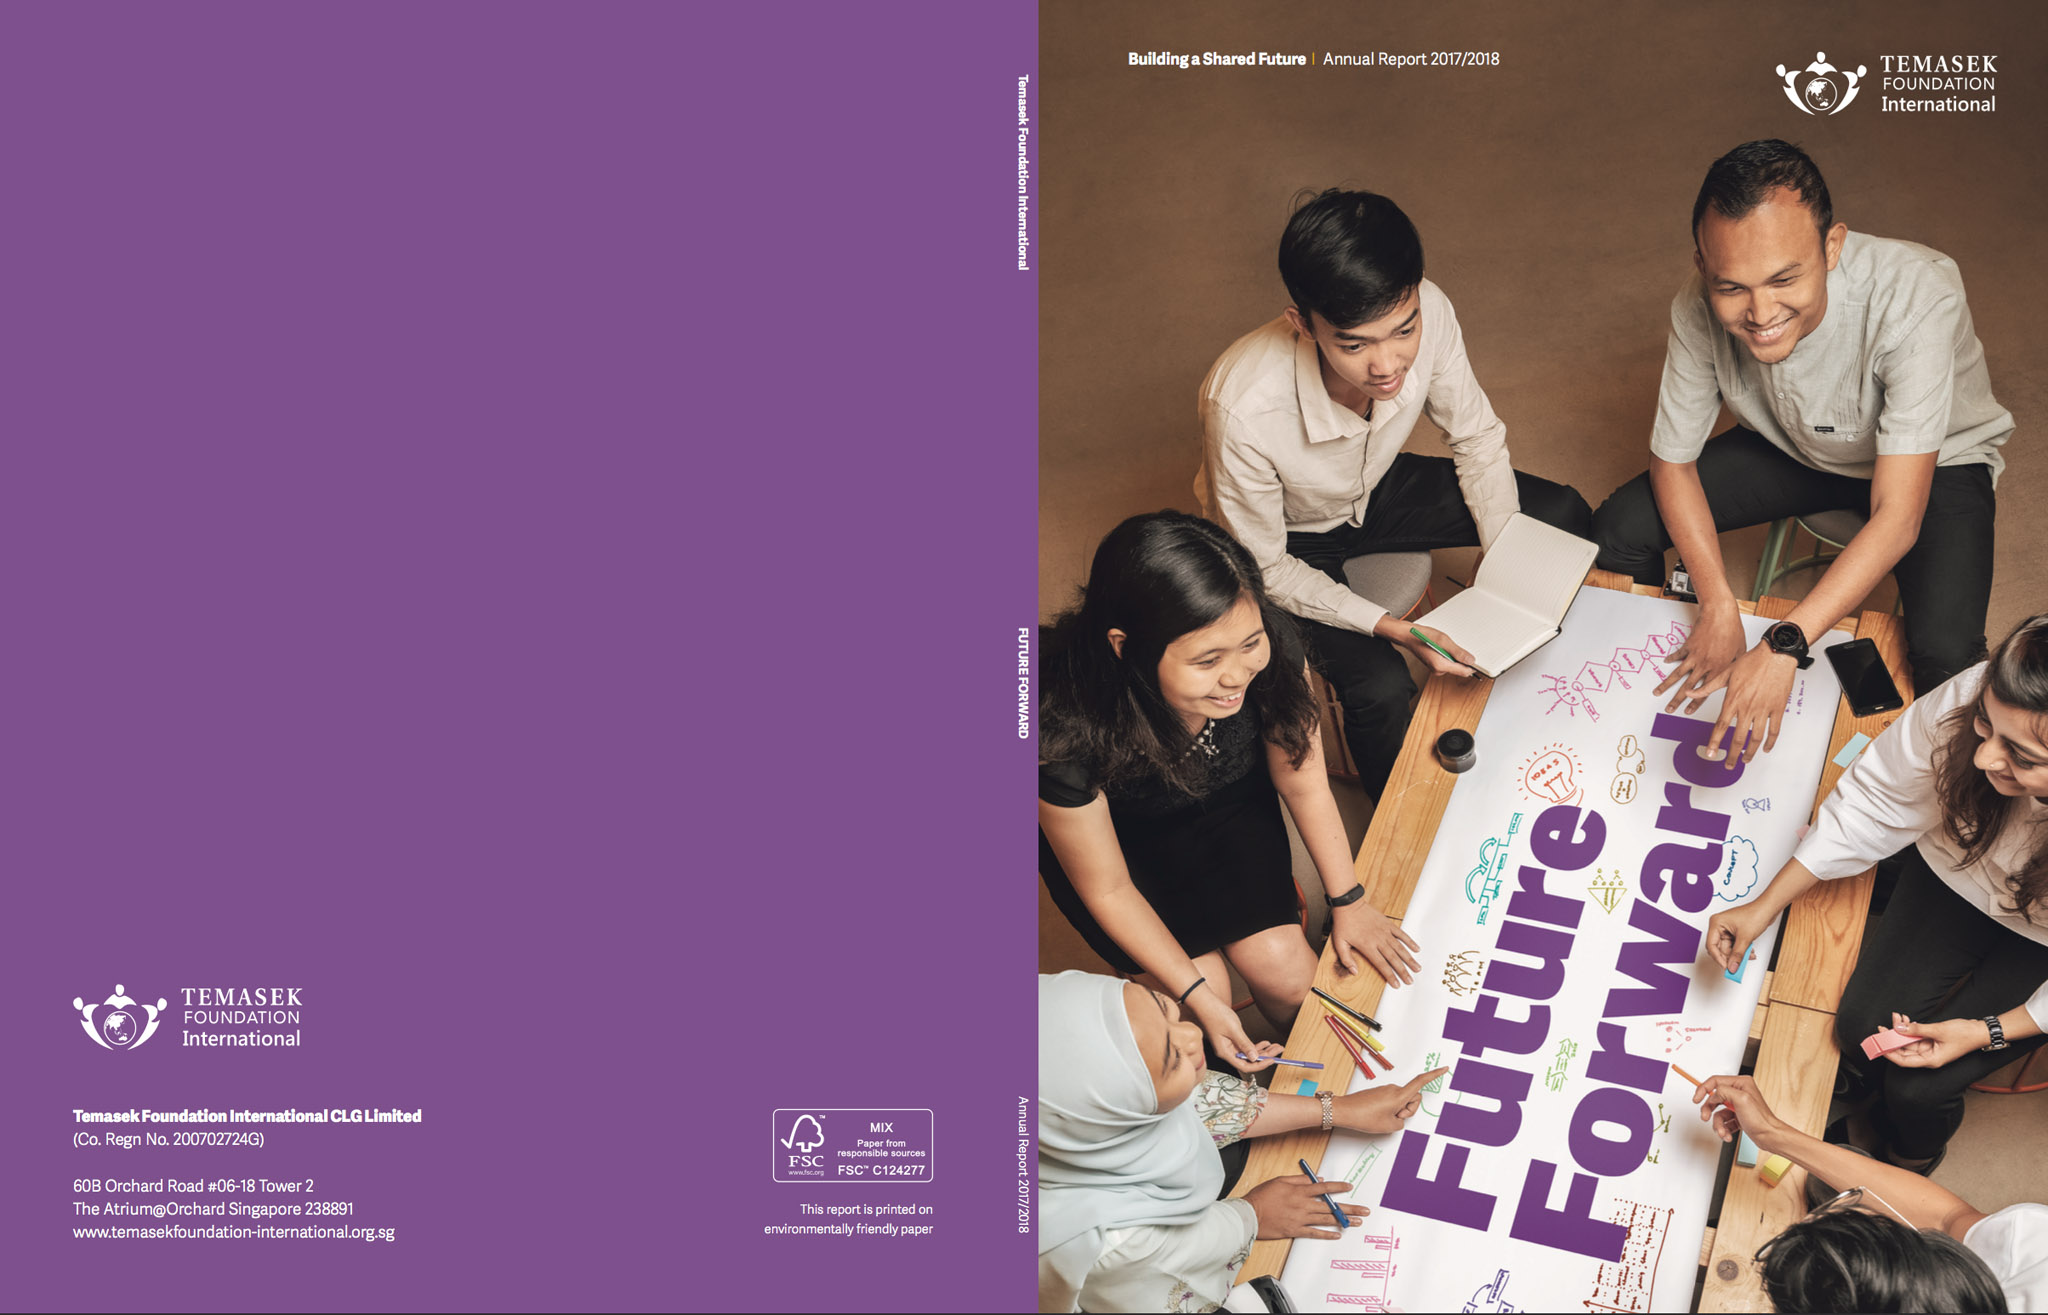 Corporate Photographer Singapore - Temasek Foundation International – Annual Report